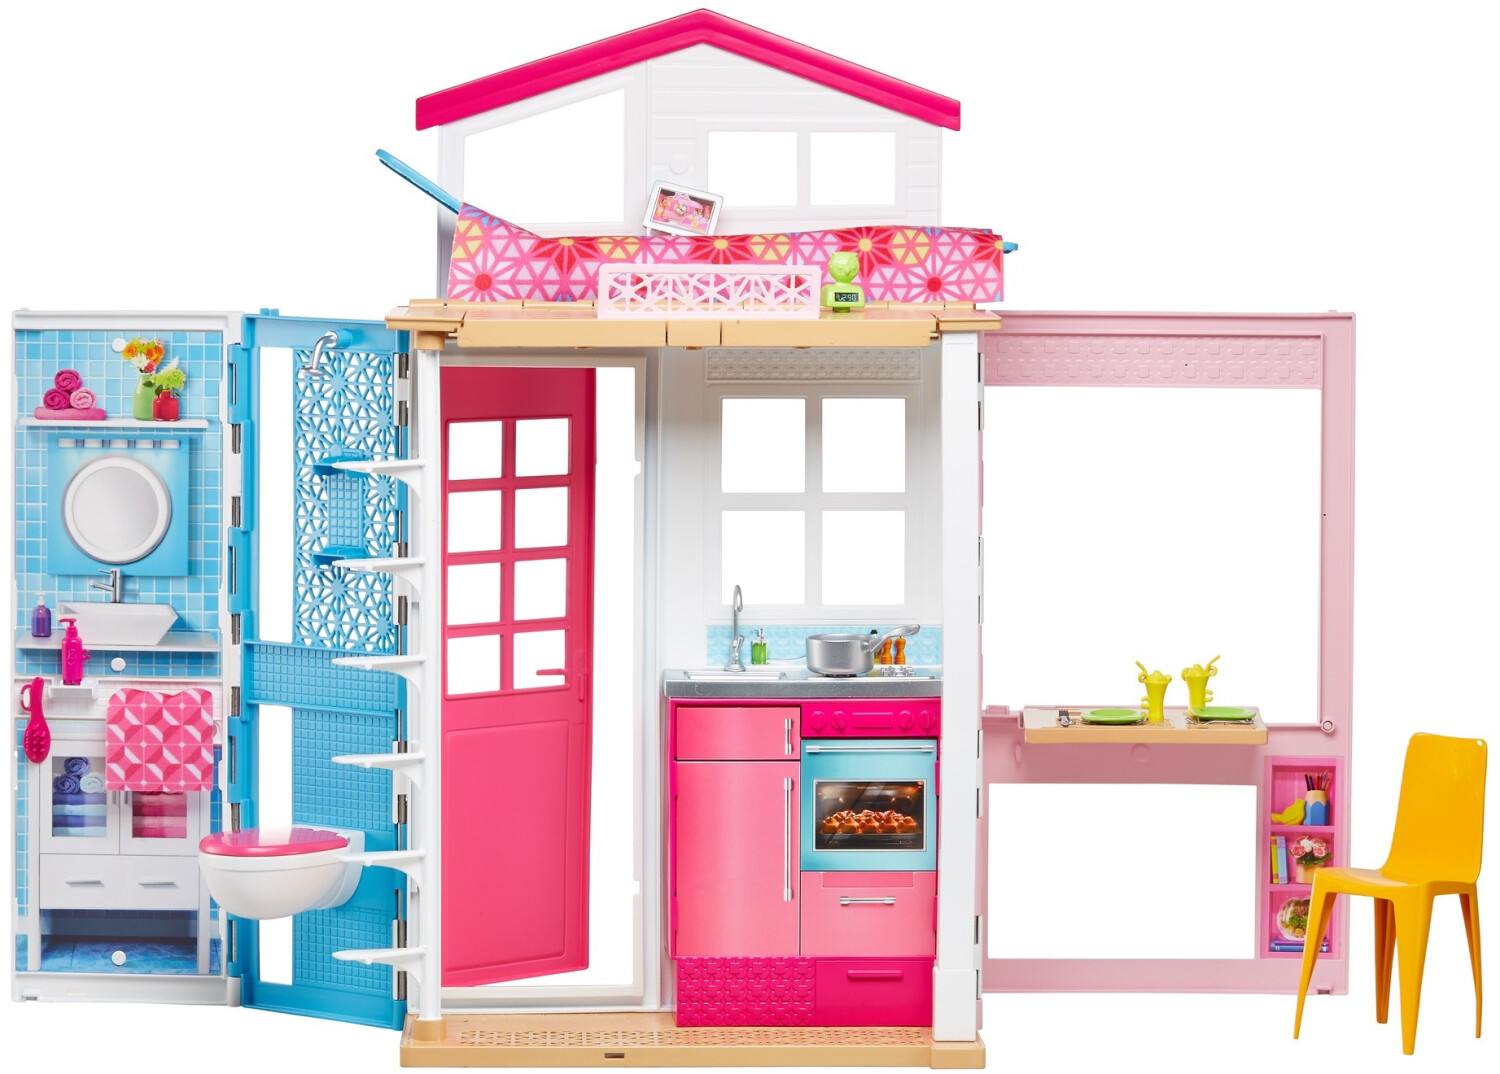 Ferienhaus ab Preisvergleich Barbie bei € | 58,00 (DVV48)